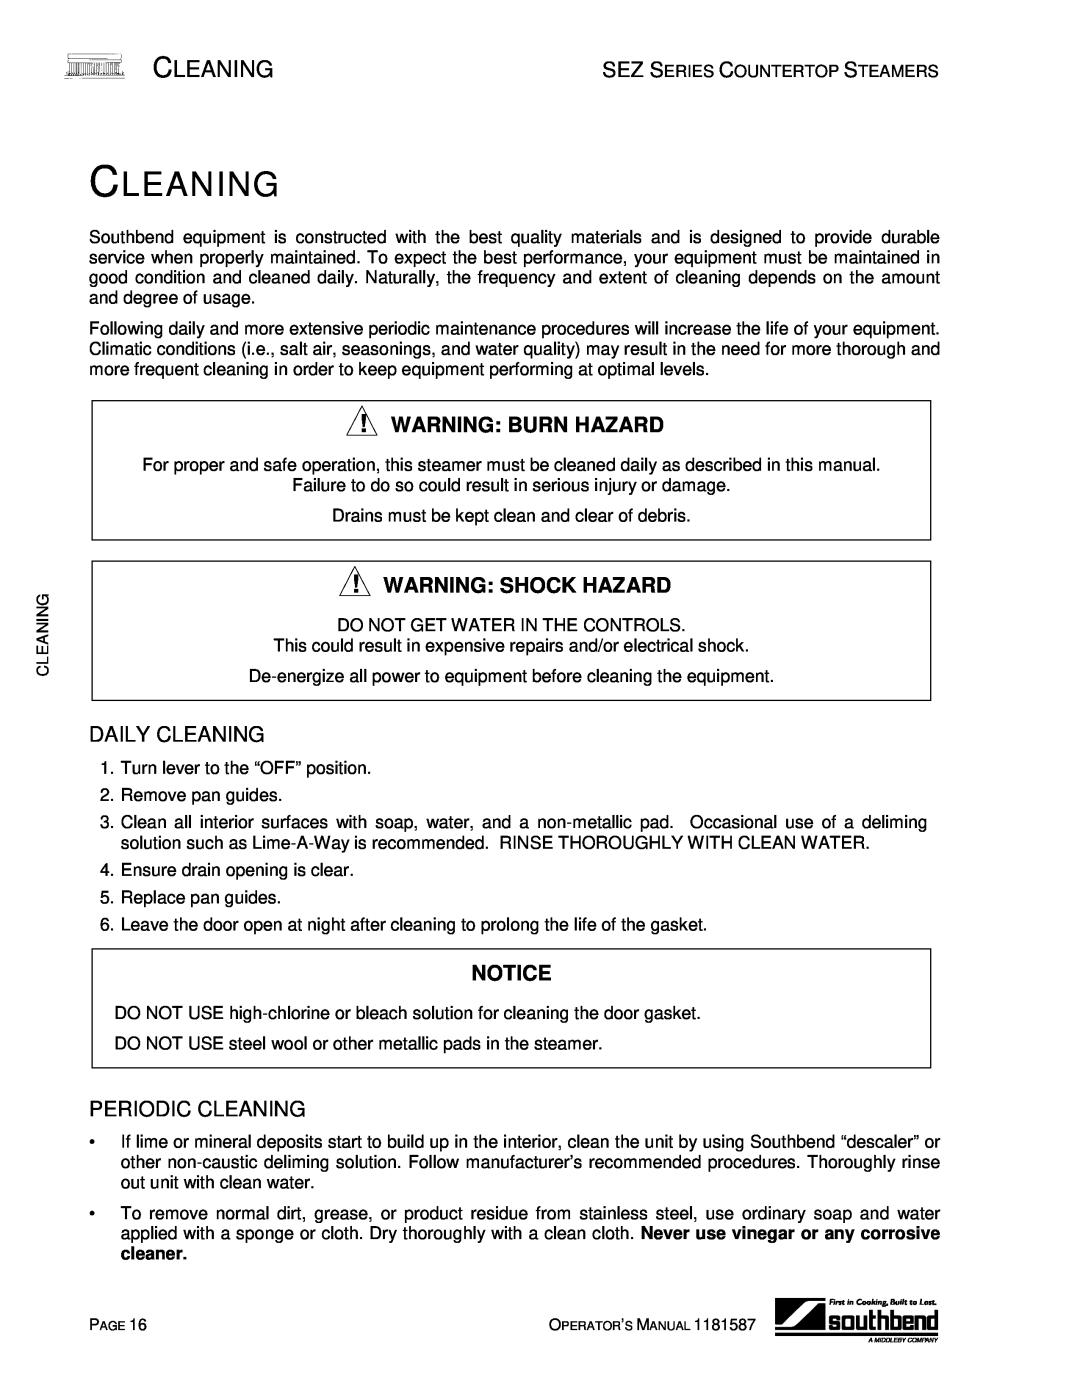 Southbend SEZ-5, SEZ-3 manual Daily Cleaning, Periodic Cleaning, Warning Burn Hazard, Warning Shock Hazard 